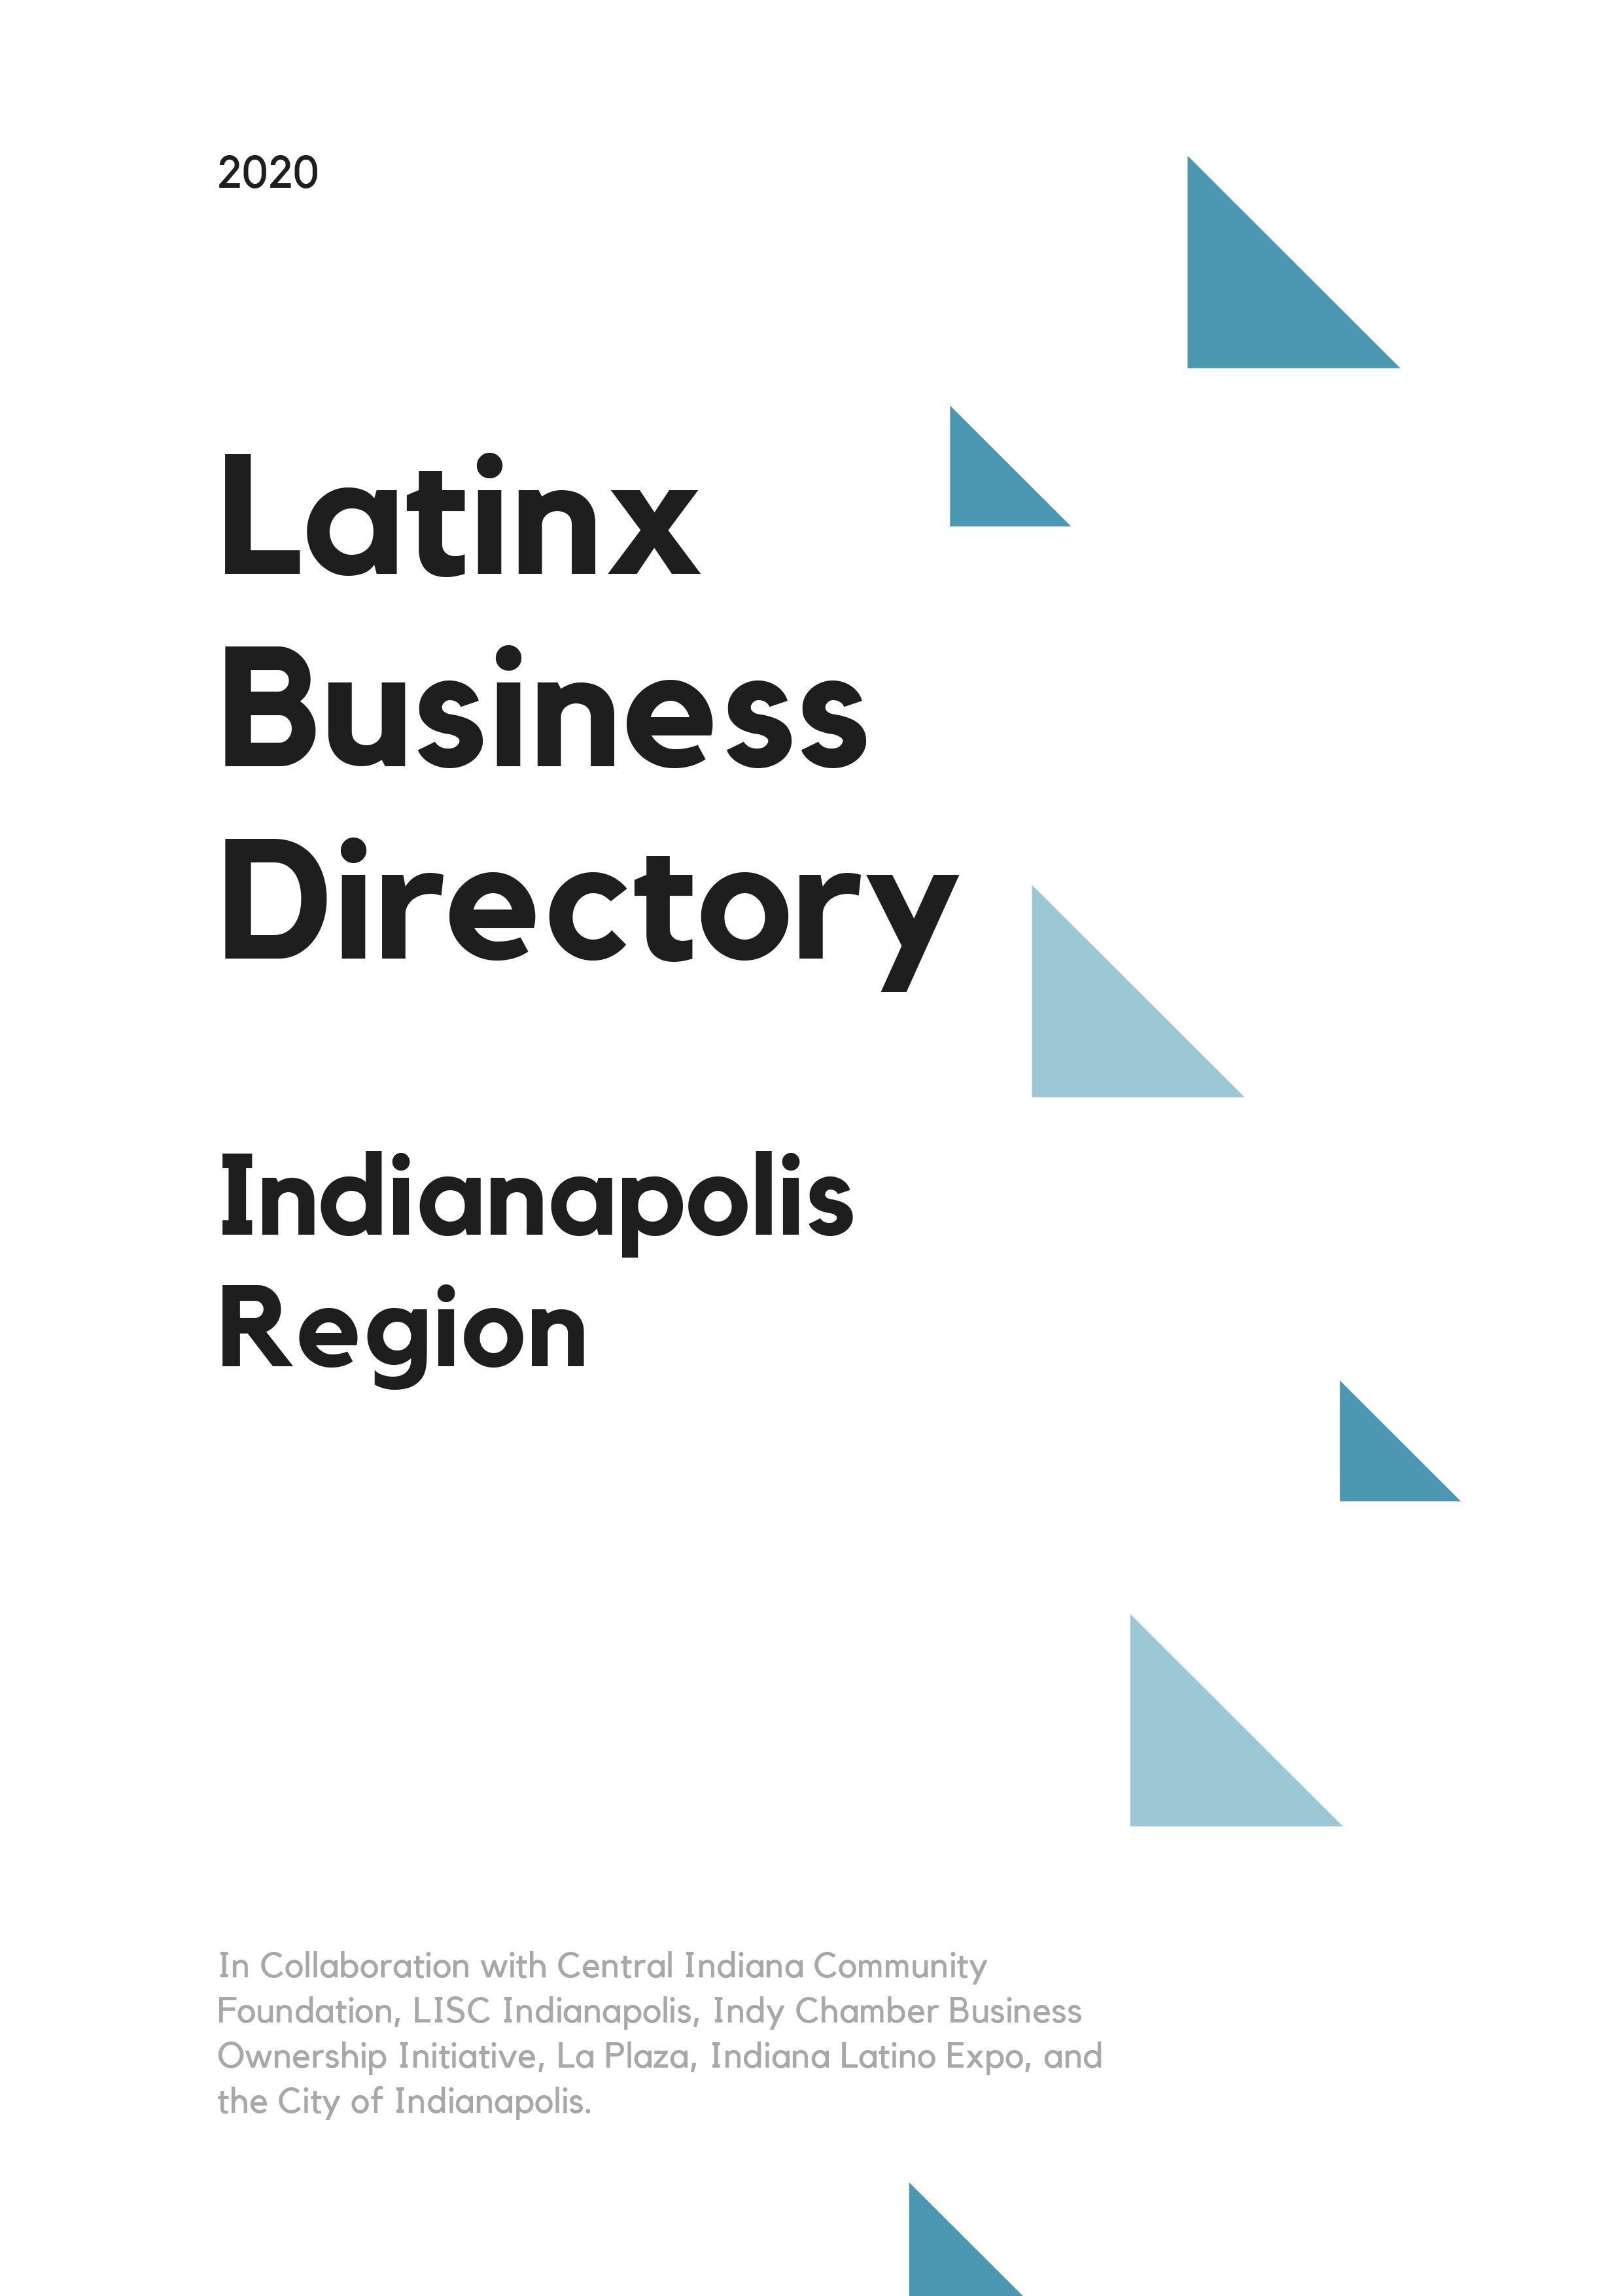 Georgia Business Directory